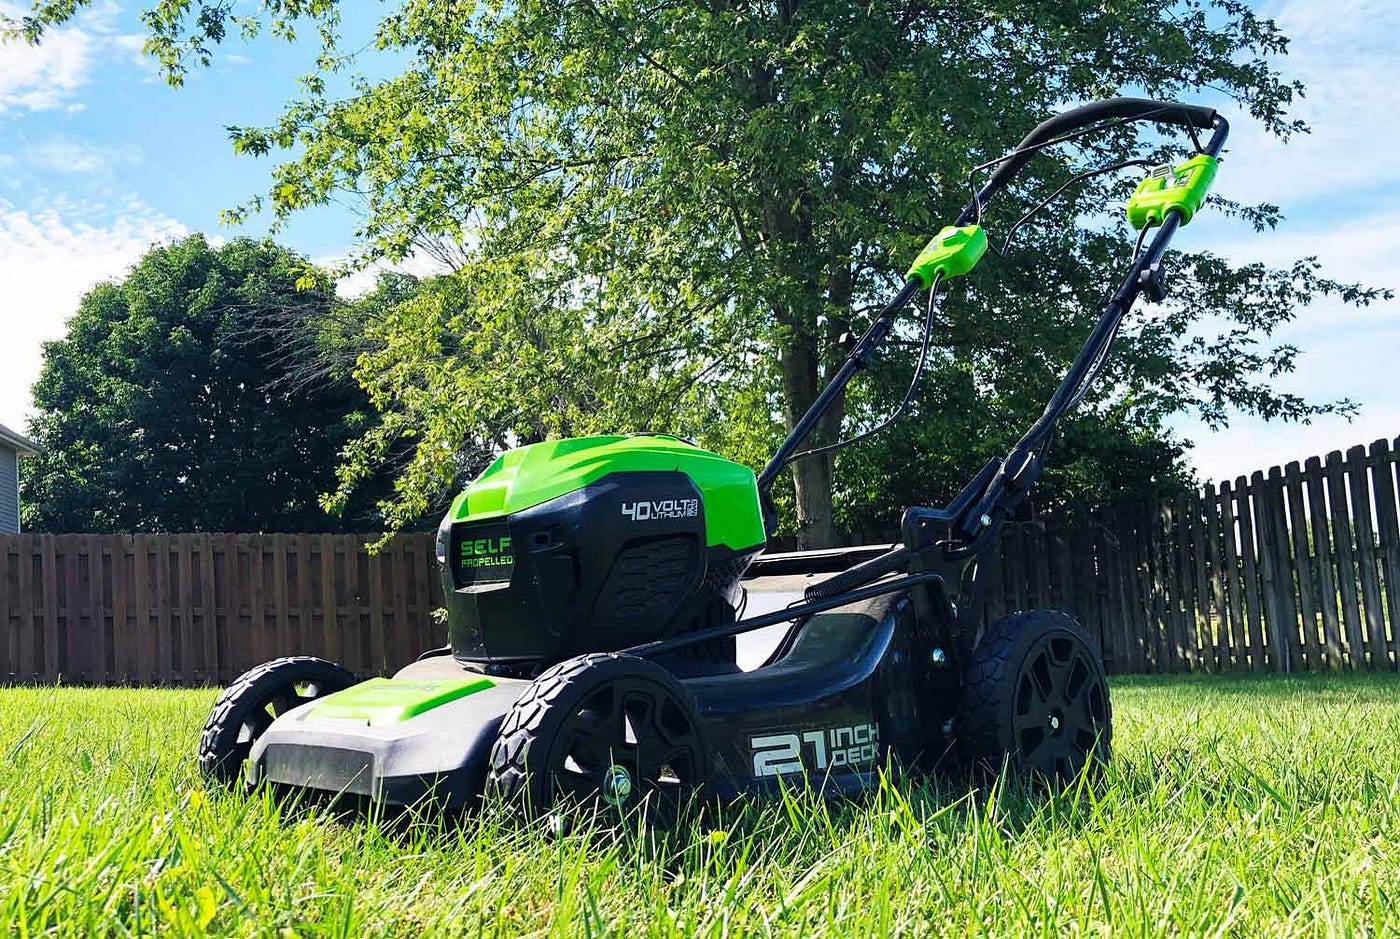 40V 21-Inch Cordless Lawn Mower